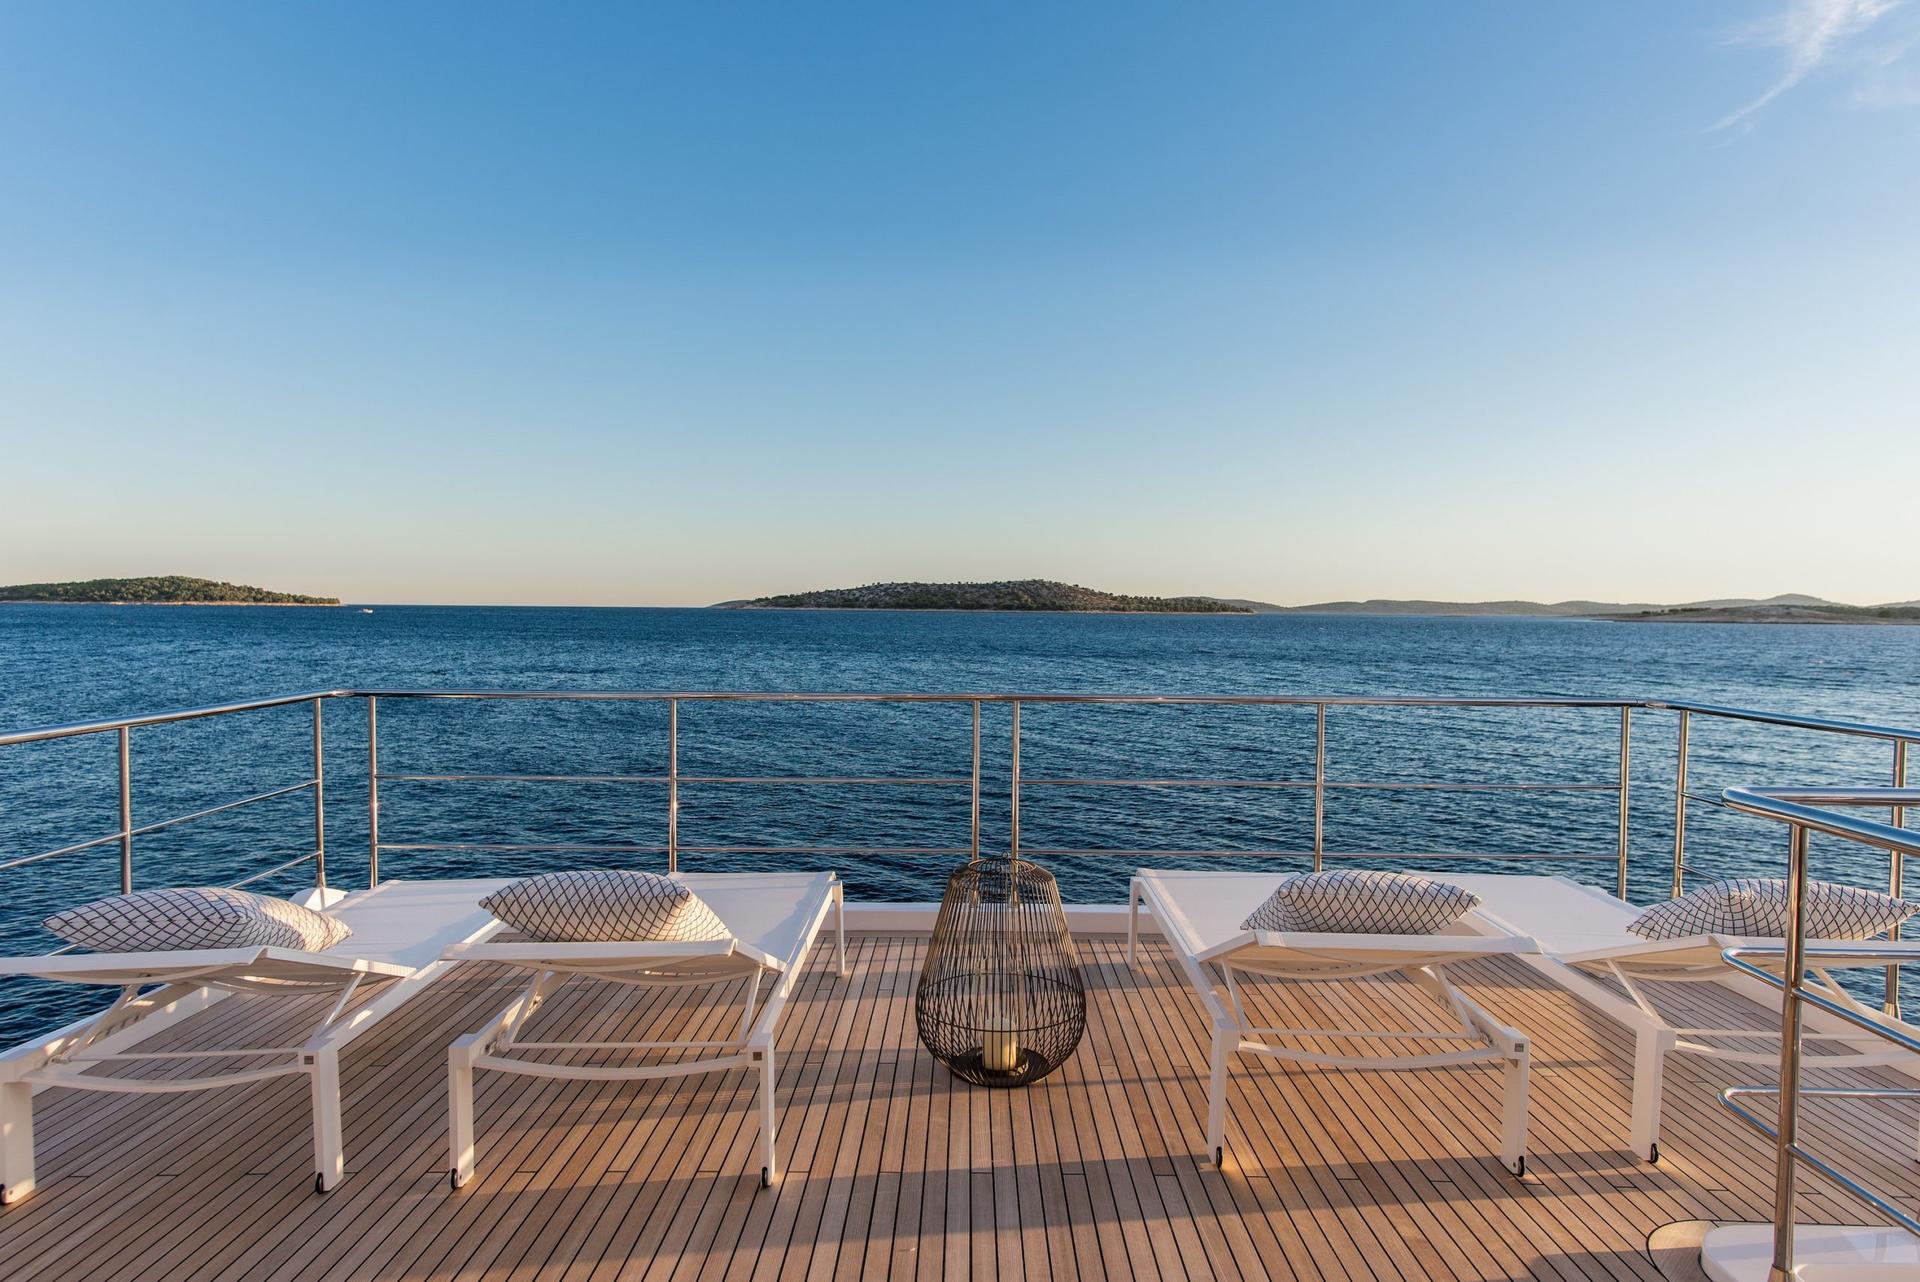 Dawo brand new 27m Azimut yacht charter in Croatia from UK & USA Flybridge sunbathing area - High Point Yachting